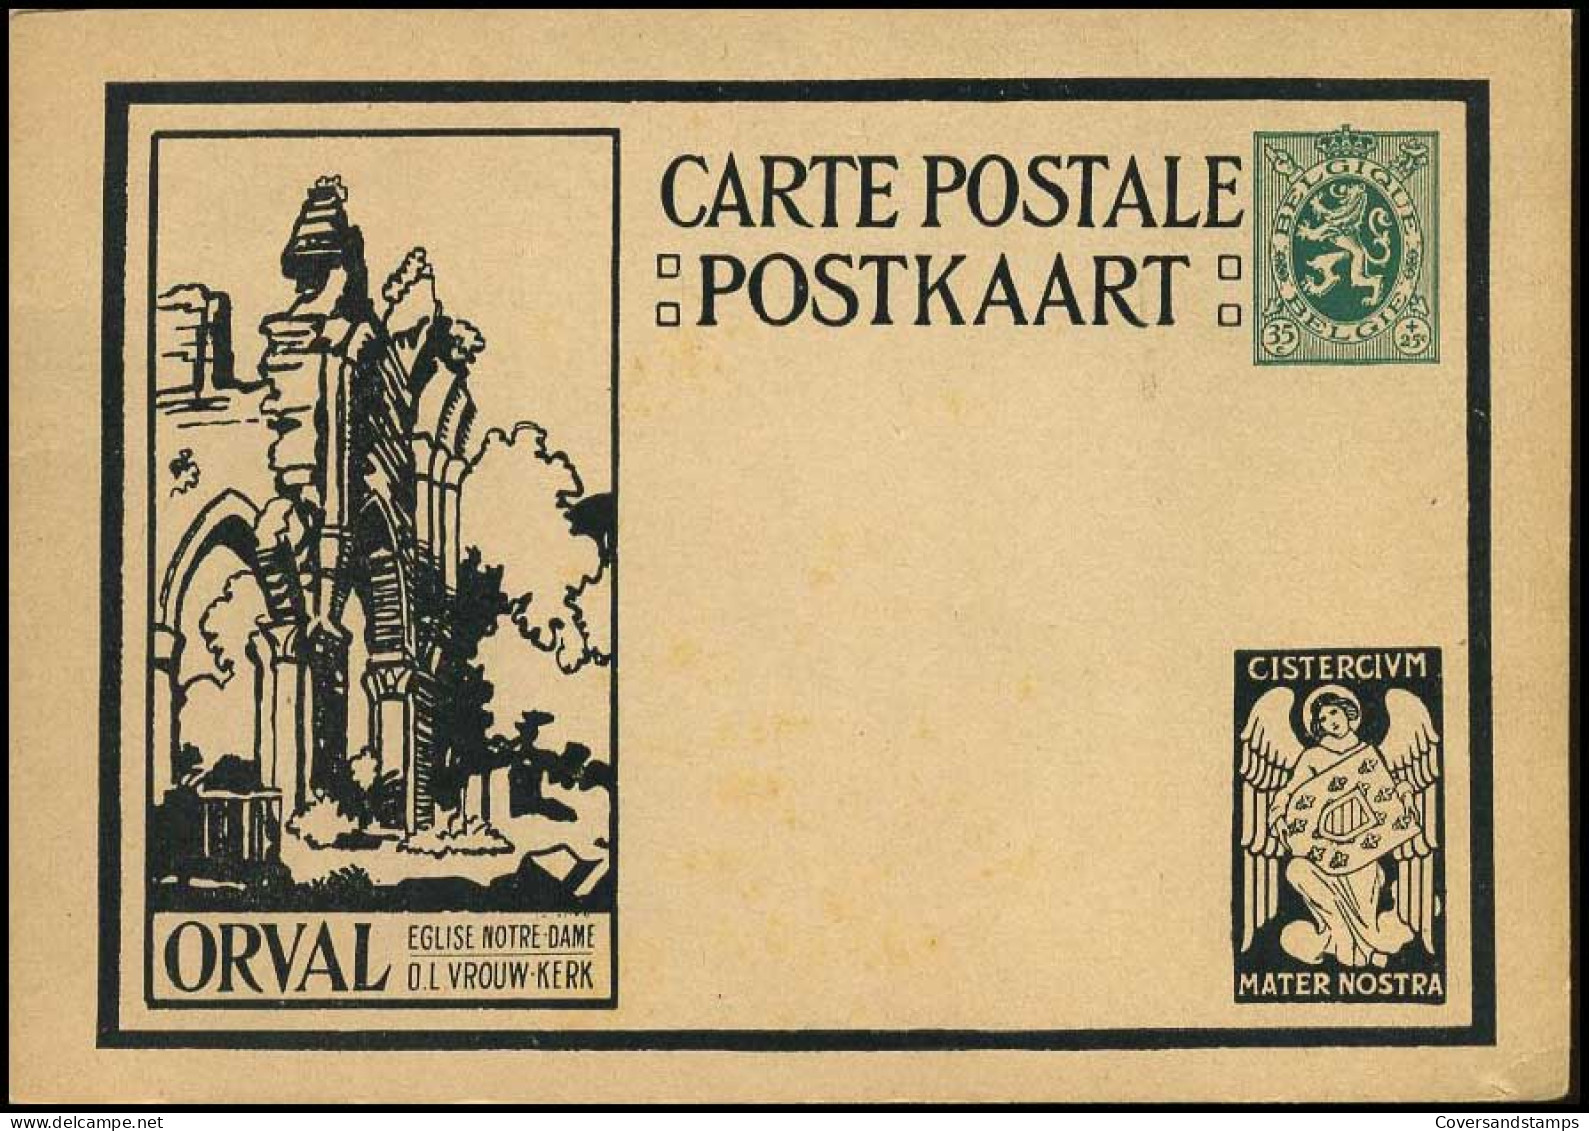 Postkaart - Orval, O.L. Vrouw Kerk - Illustrated Postcards (1971-2014) [BK]